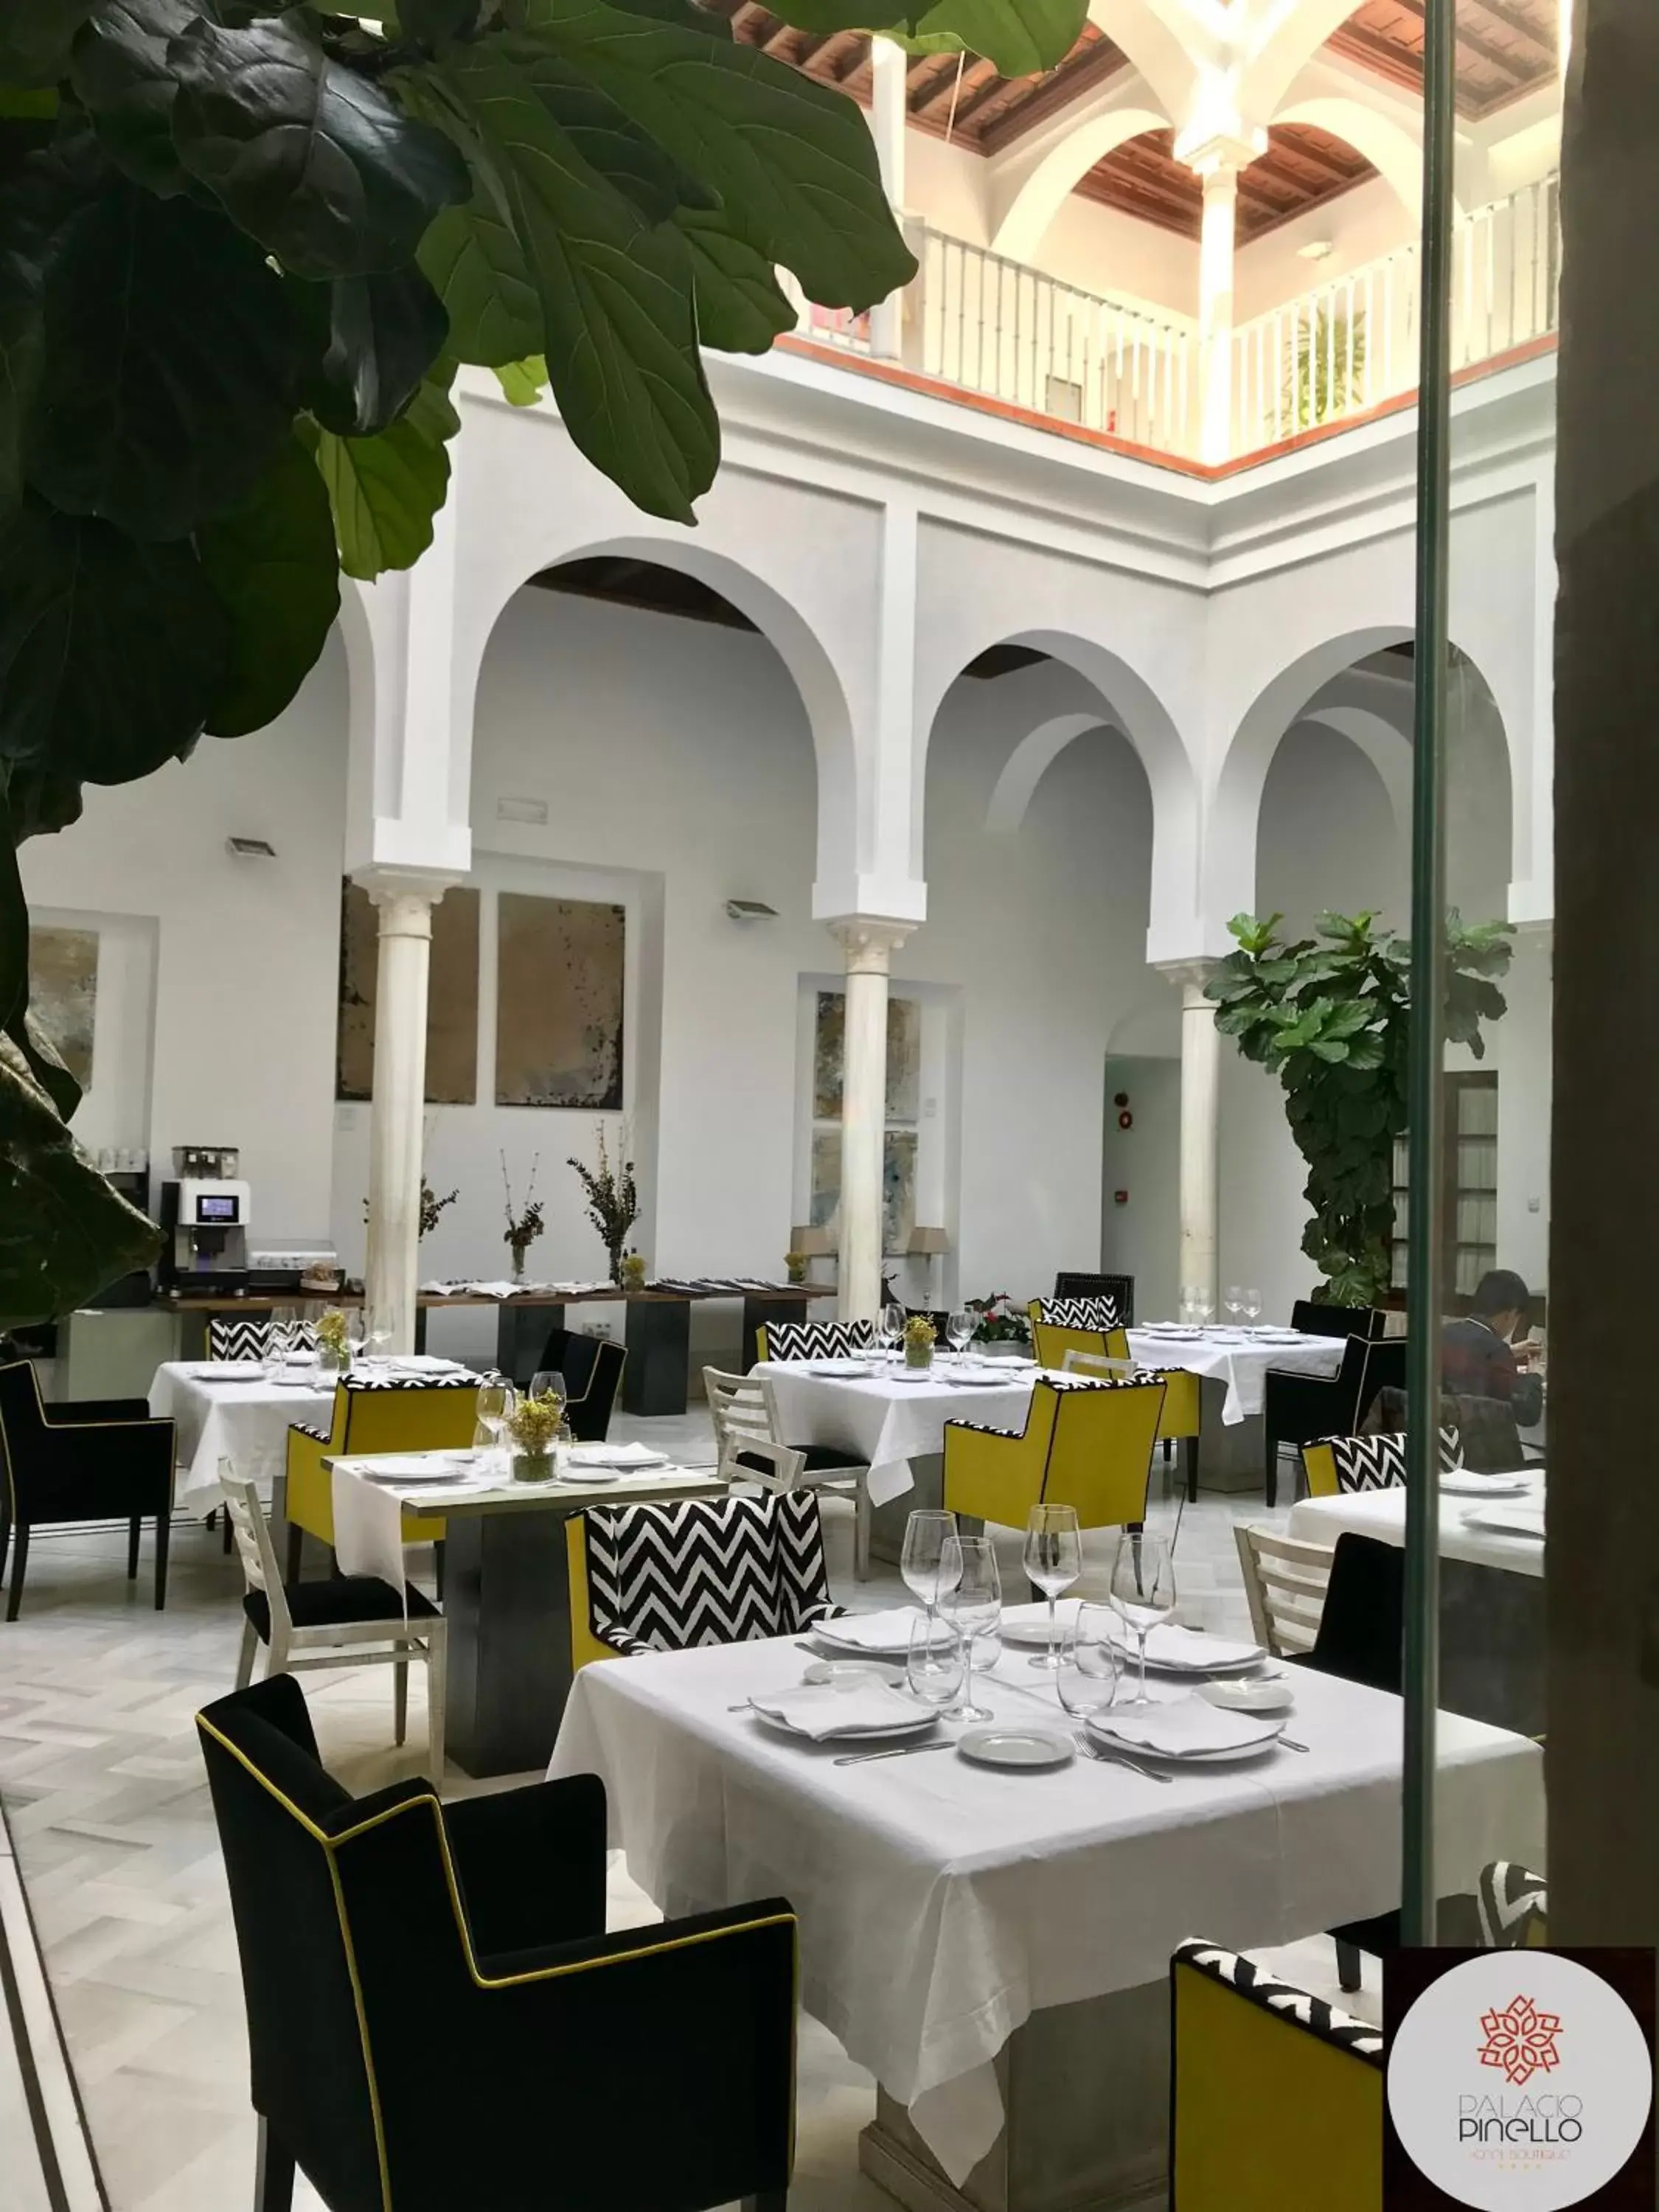 Patio, Restaurant/Places to Eat in Palacio Pinello